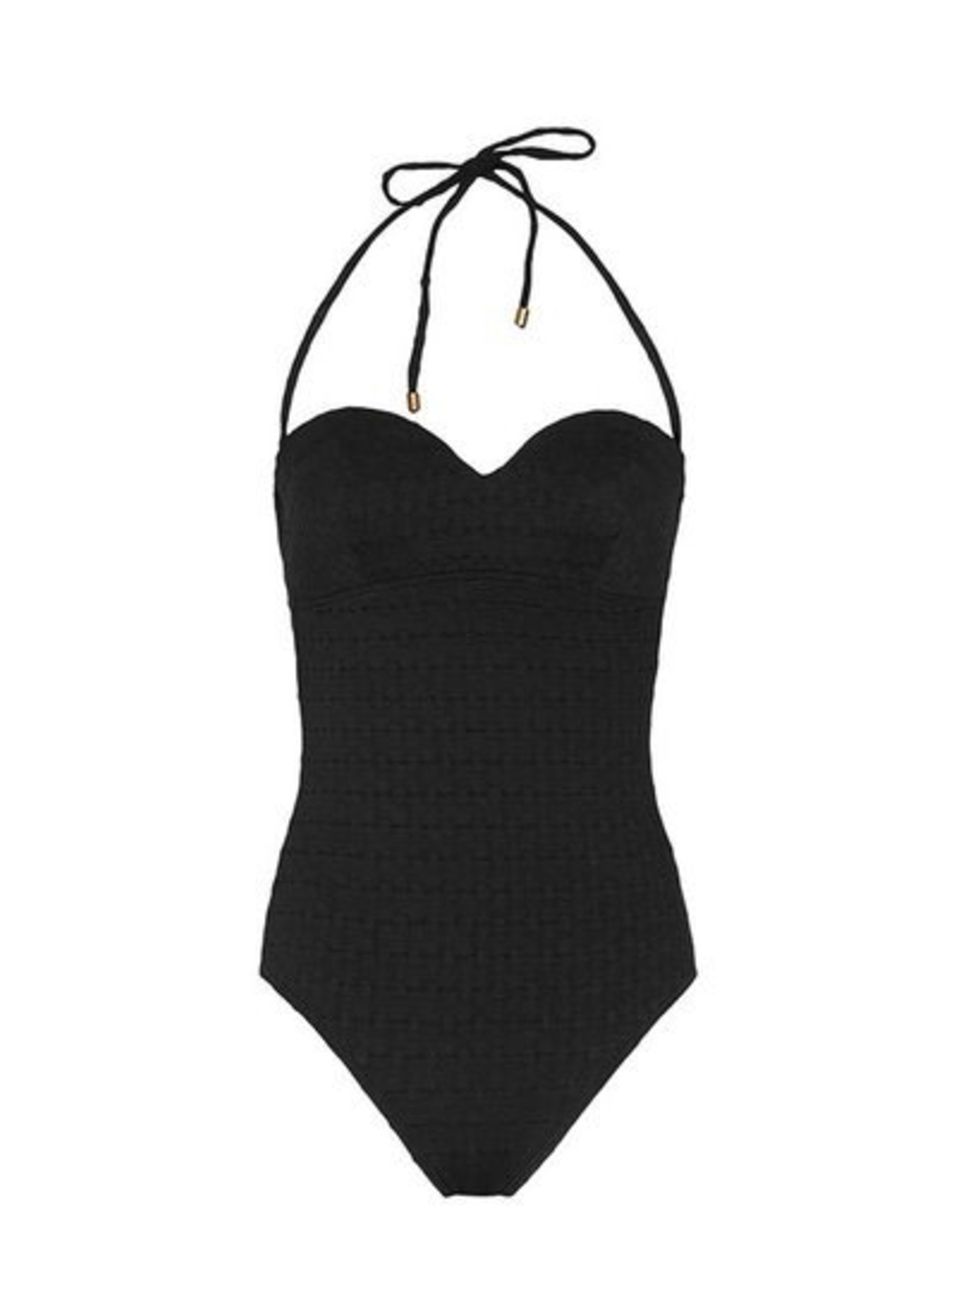 Fashion Assistant Espe de la Fuente is keeping it simple with an elegant black one-piece.

Reiss swimsuit, £79